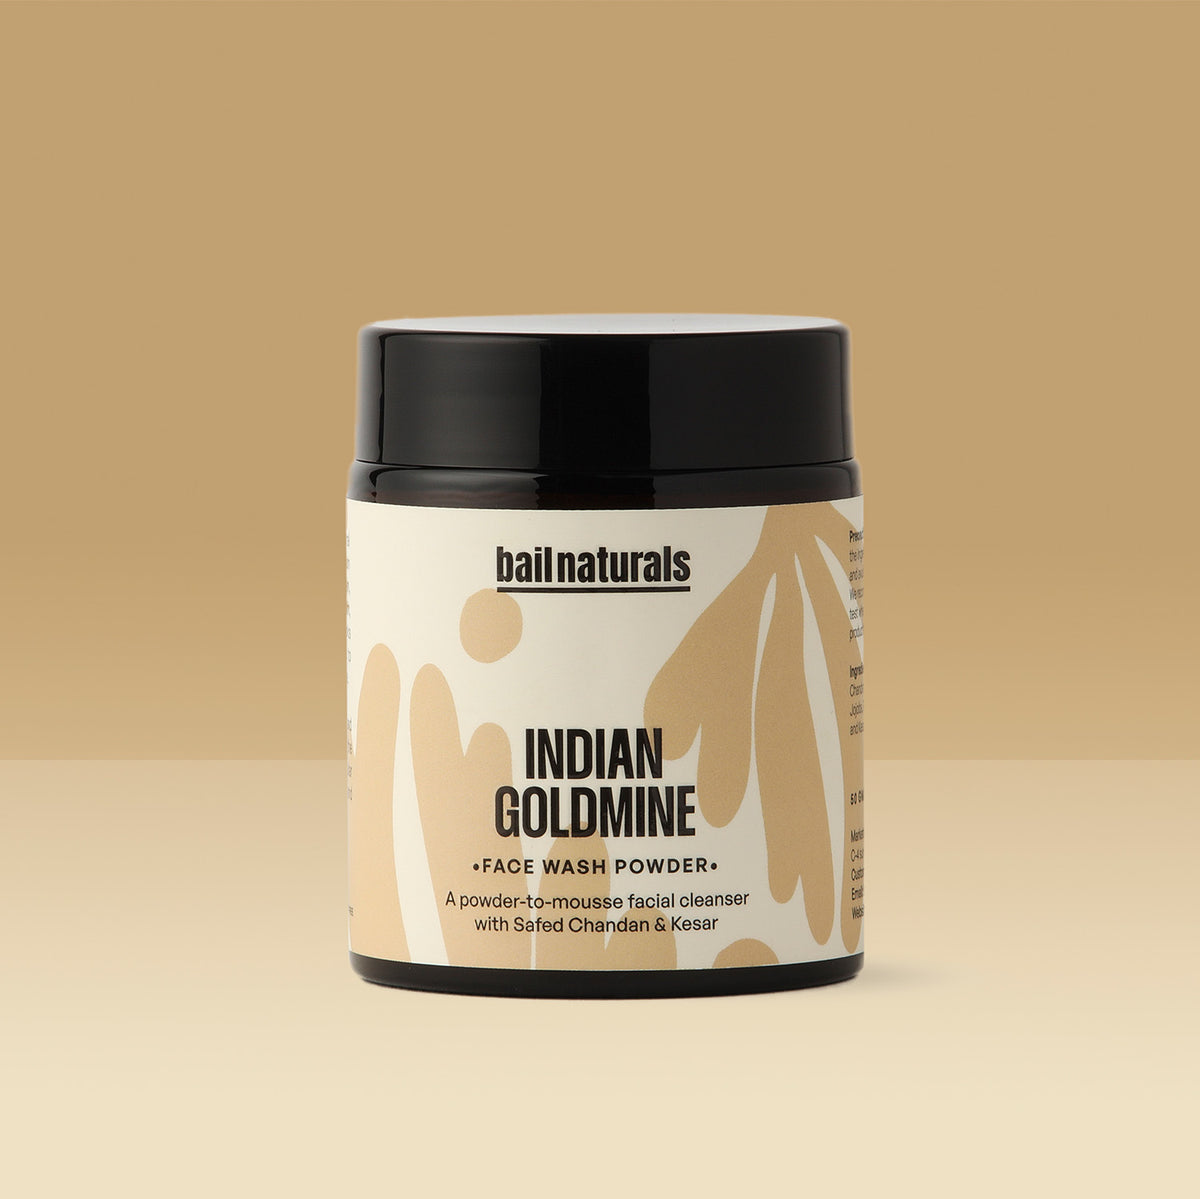 Indian Goldmine | Face Wash Powder with Safed Chandan & Kesar - Bail Naturals Store